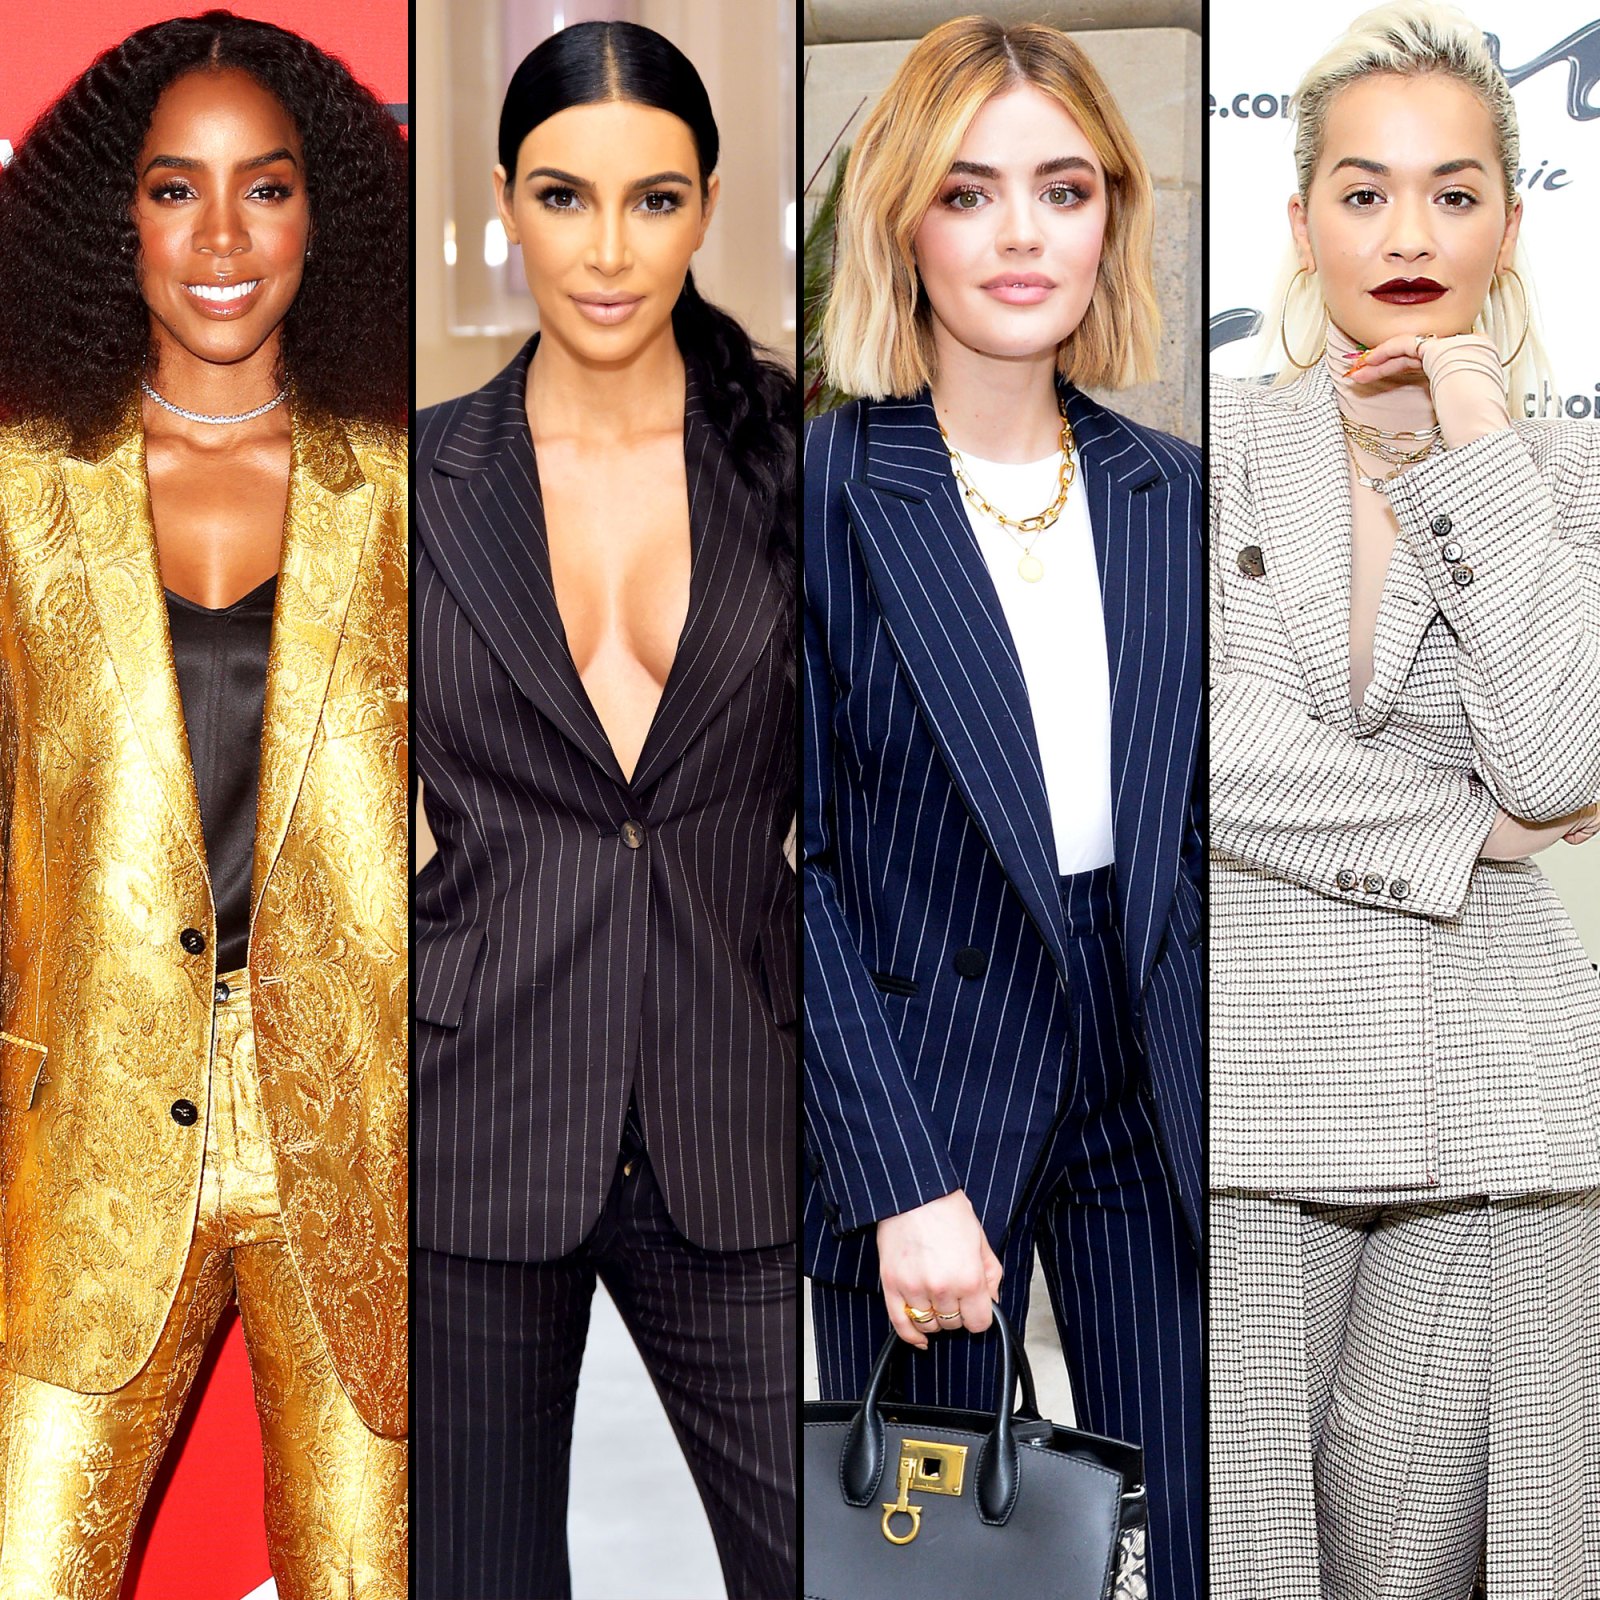 Kelly Rowland, Kim Kardashian, Lucy Hale and Rita Ora